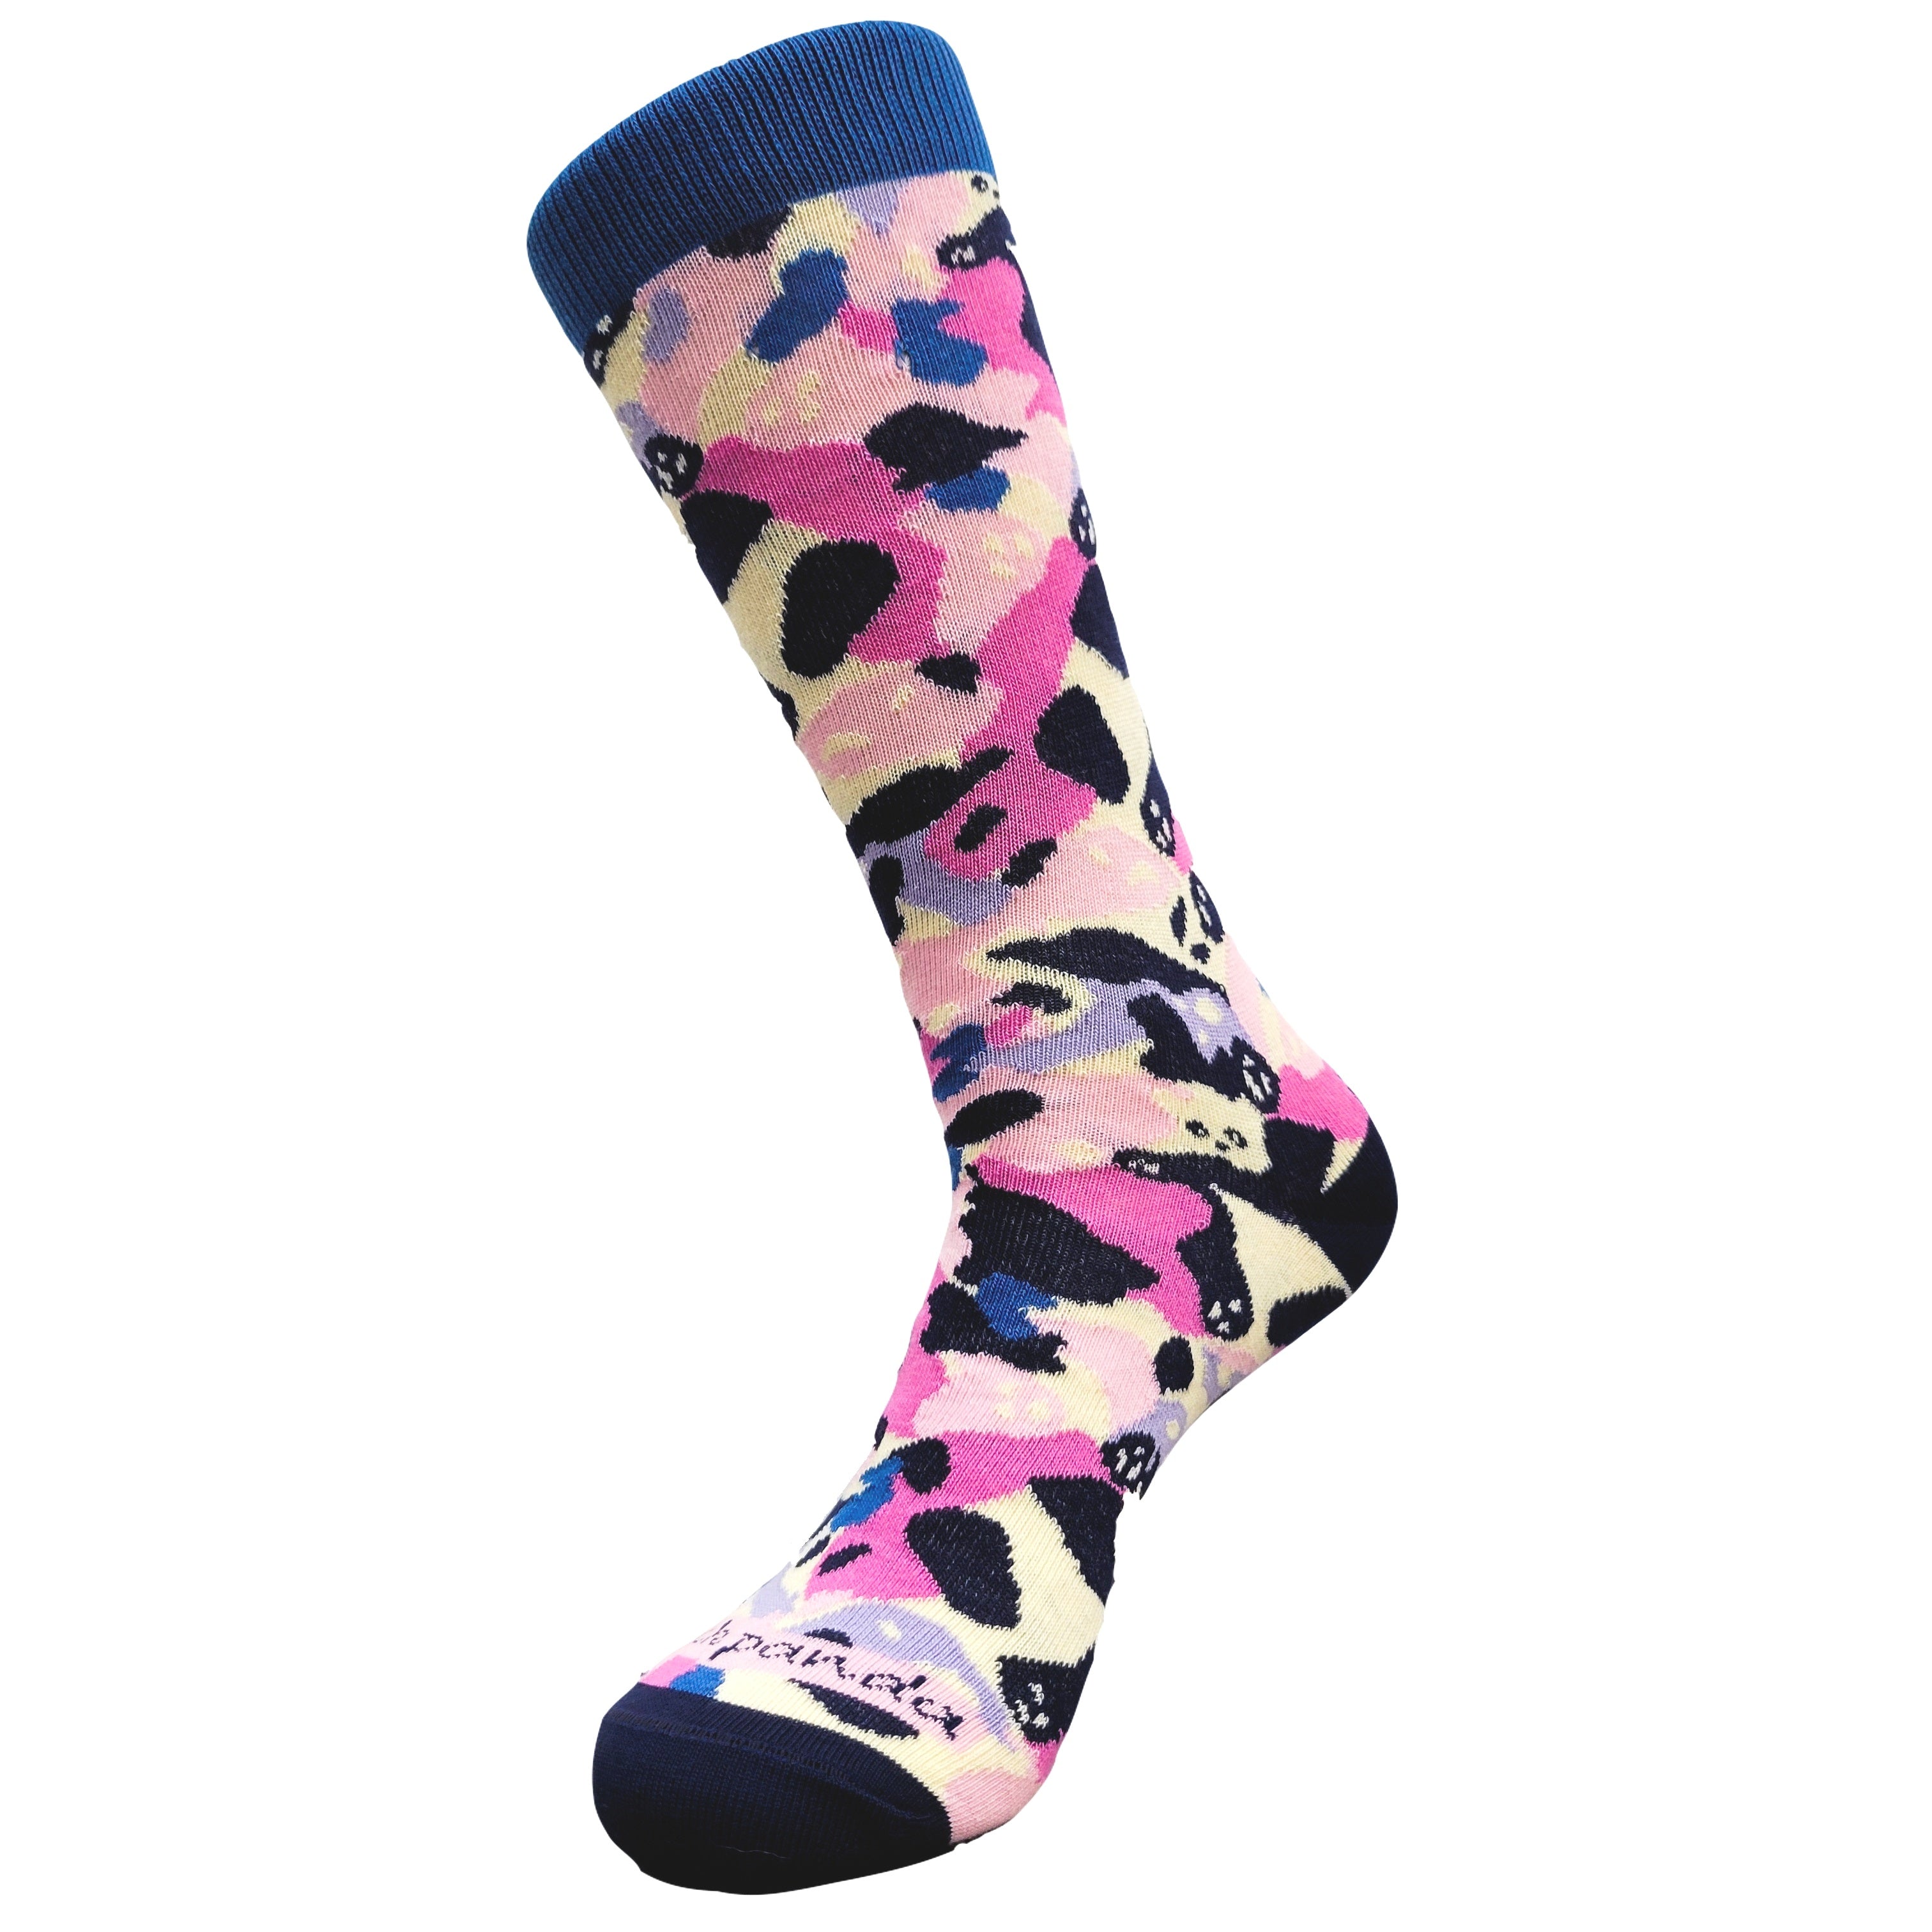 Camouflage Panda Socks from the Sock Panda (Adult Medium)